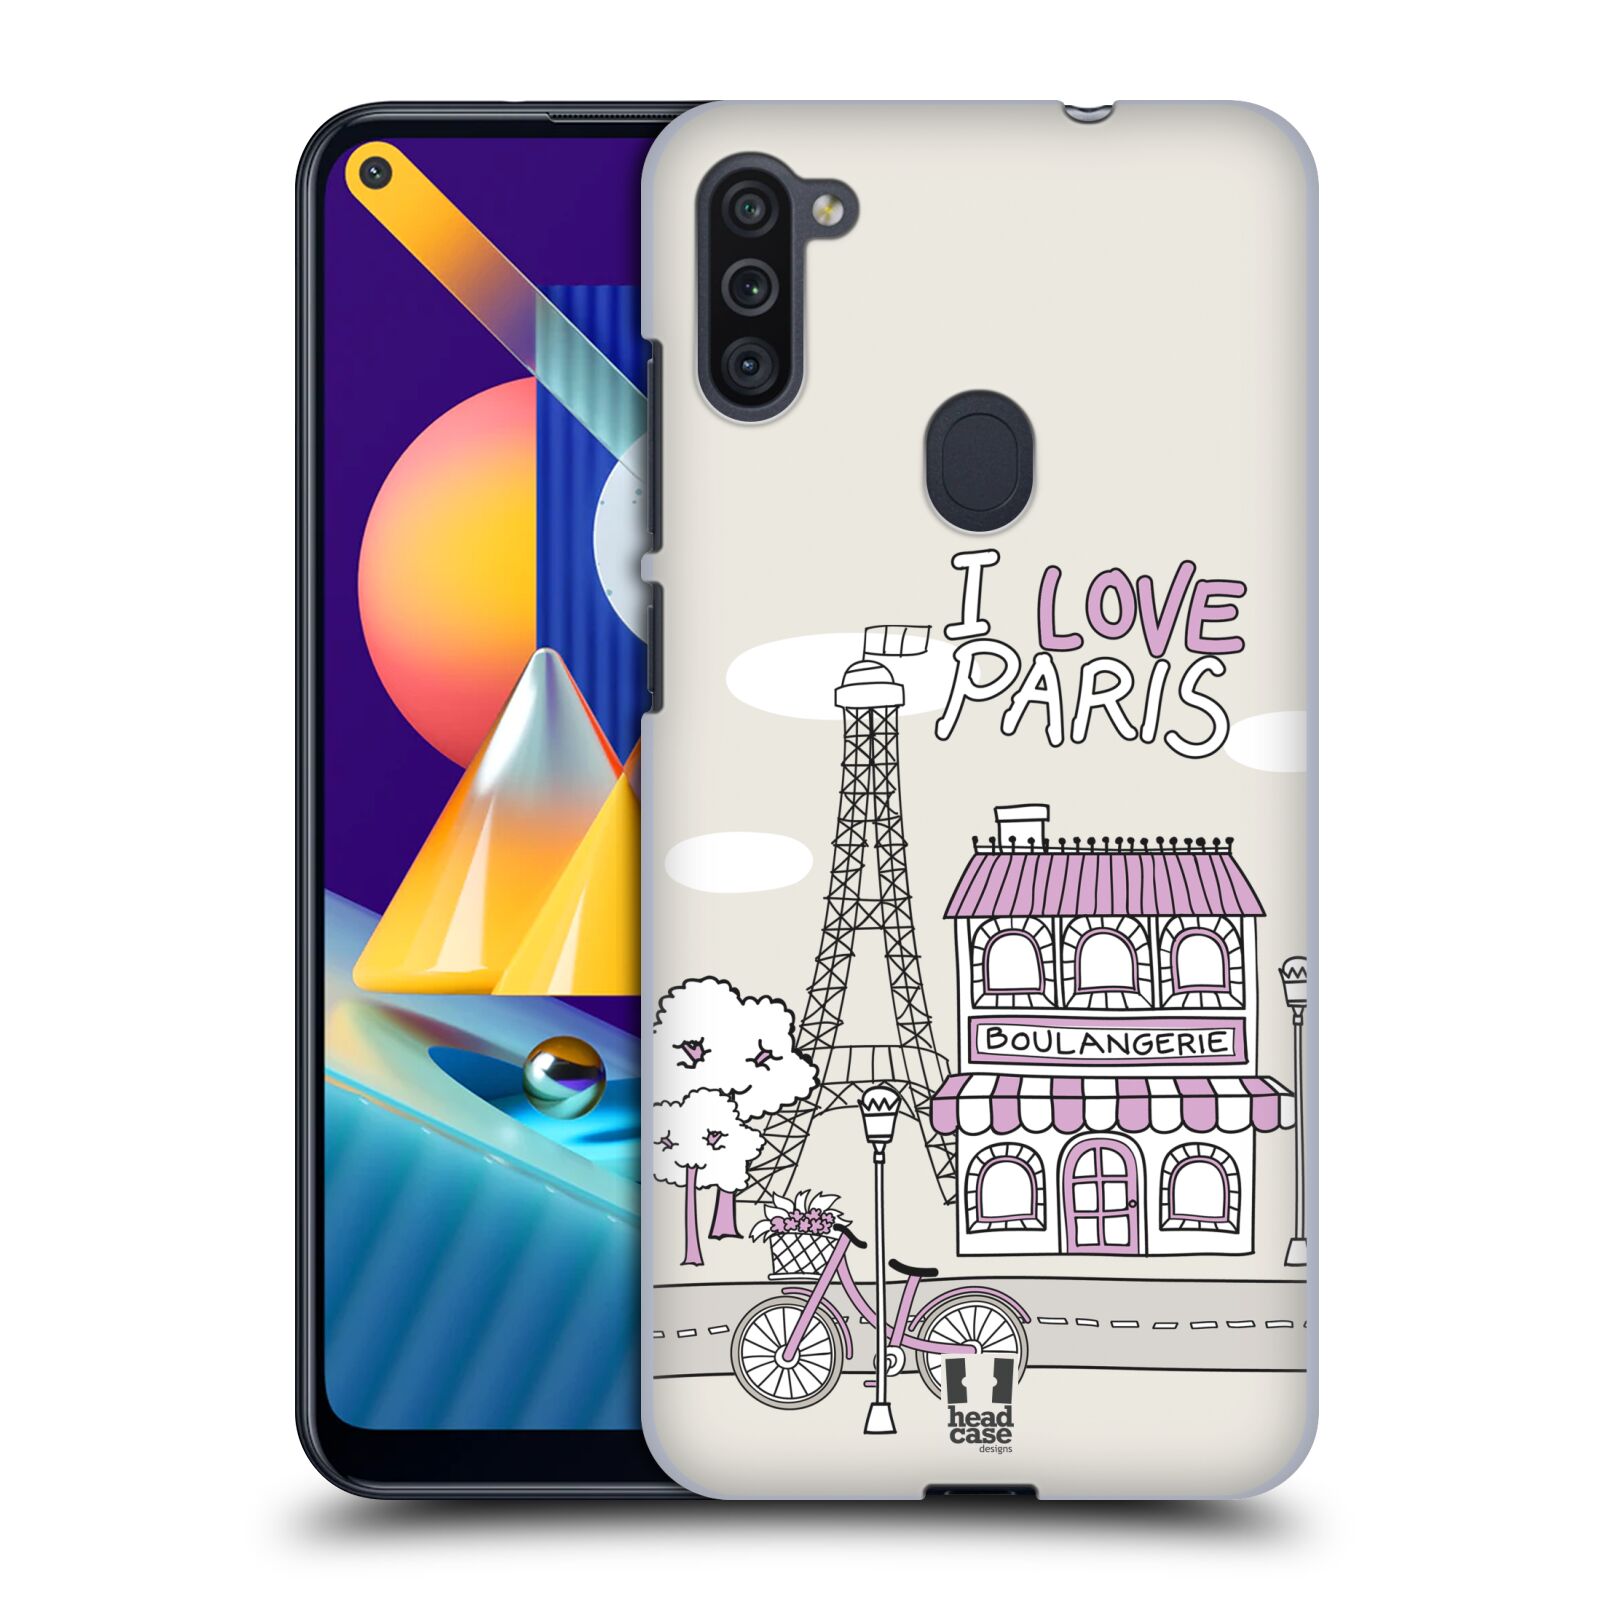 Plastový obal HEAD CASE na mobil Samsung Galaxy M11 vzor Kreslená městečka FIALOVÁ, Paříž, Francie, I LOVE PARIS